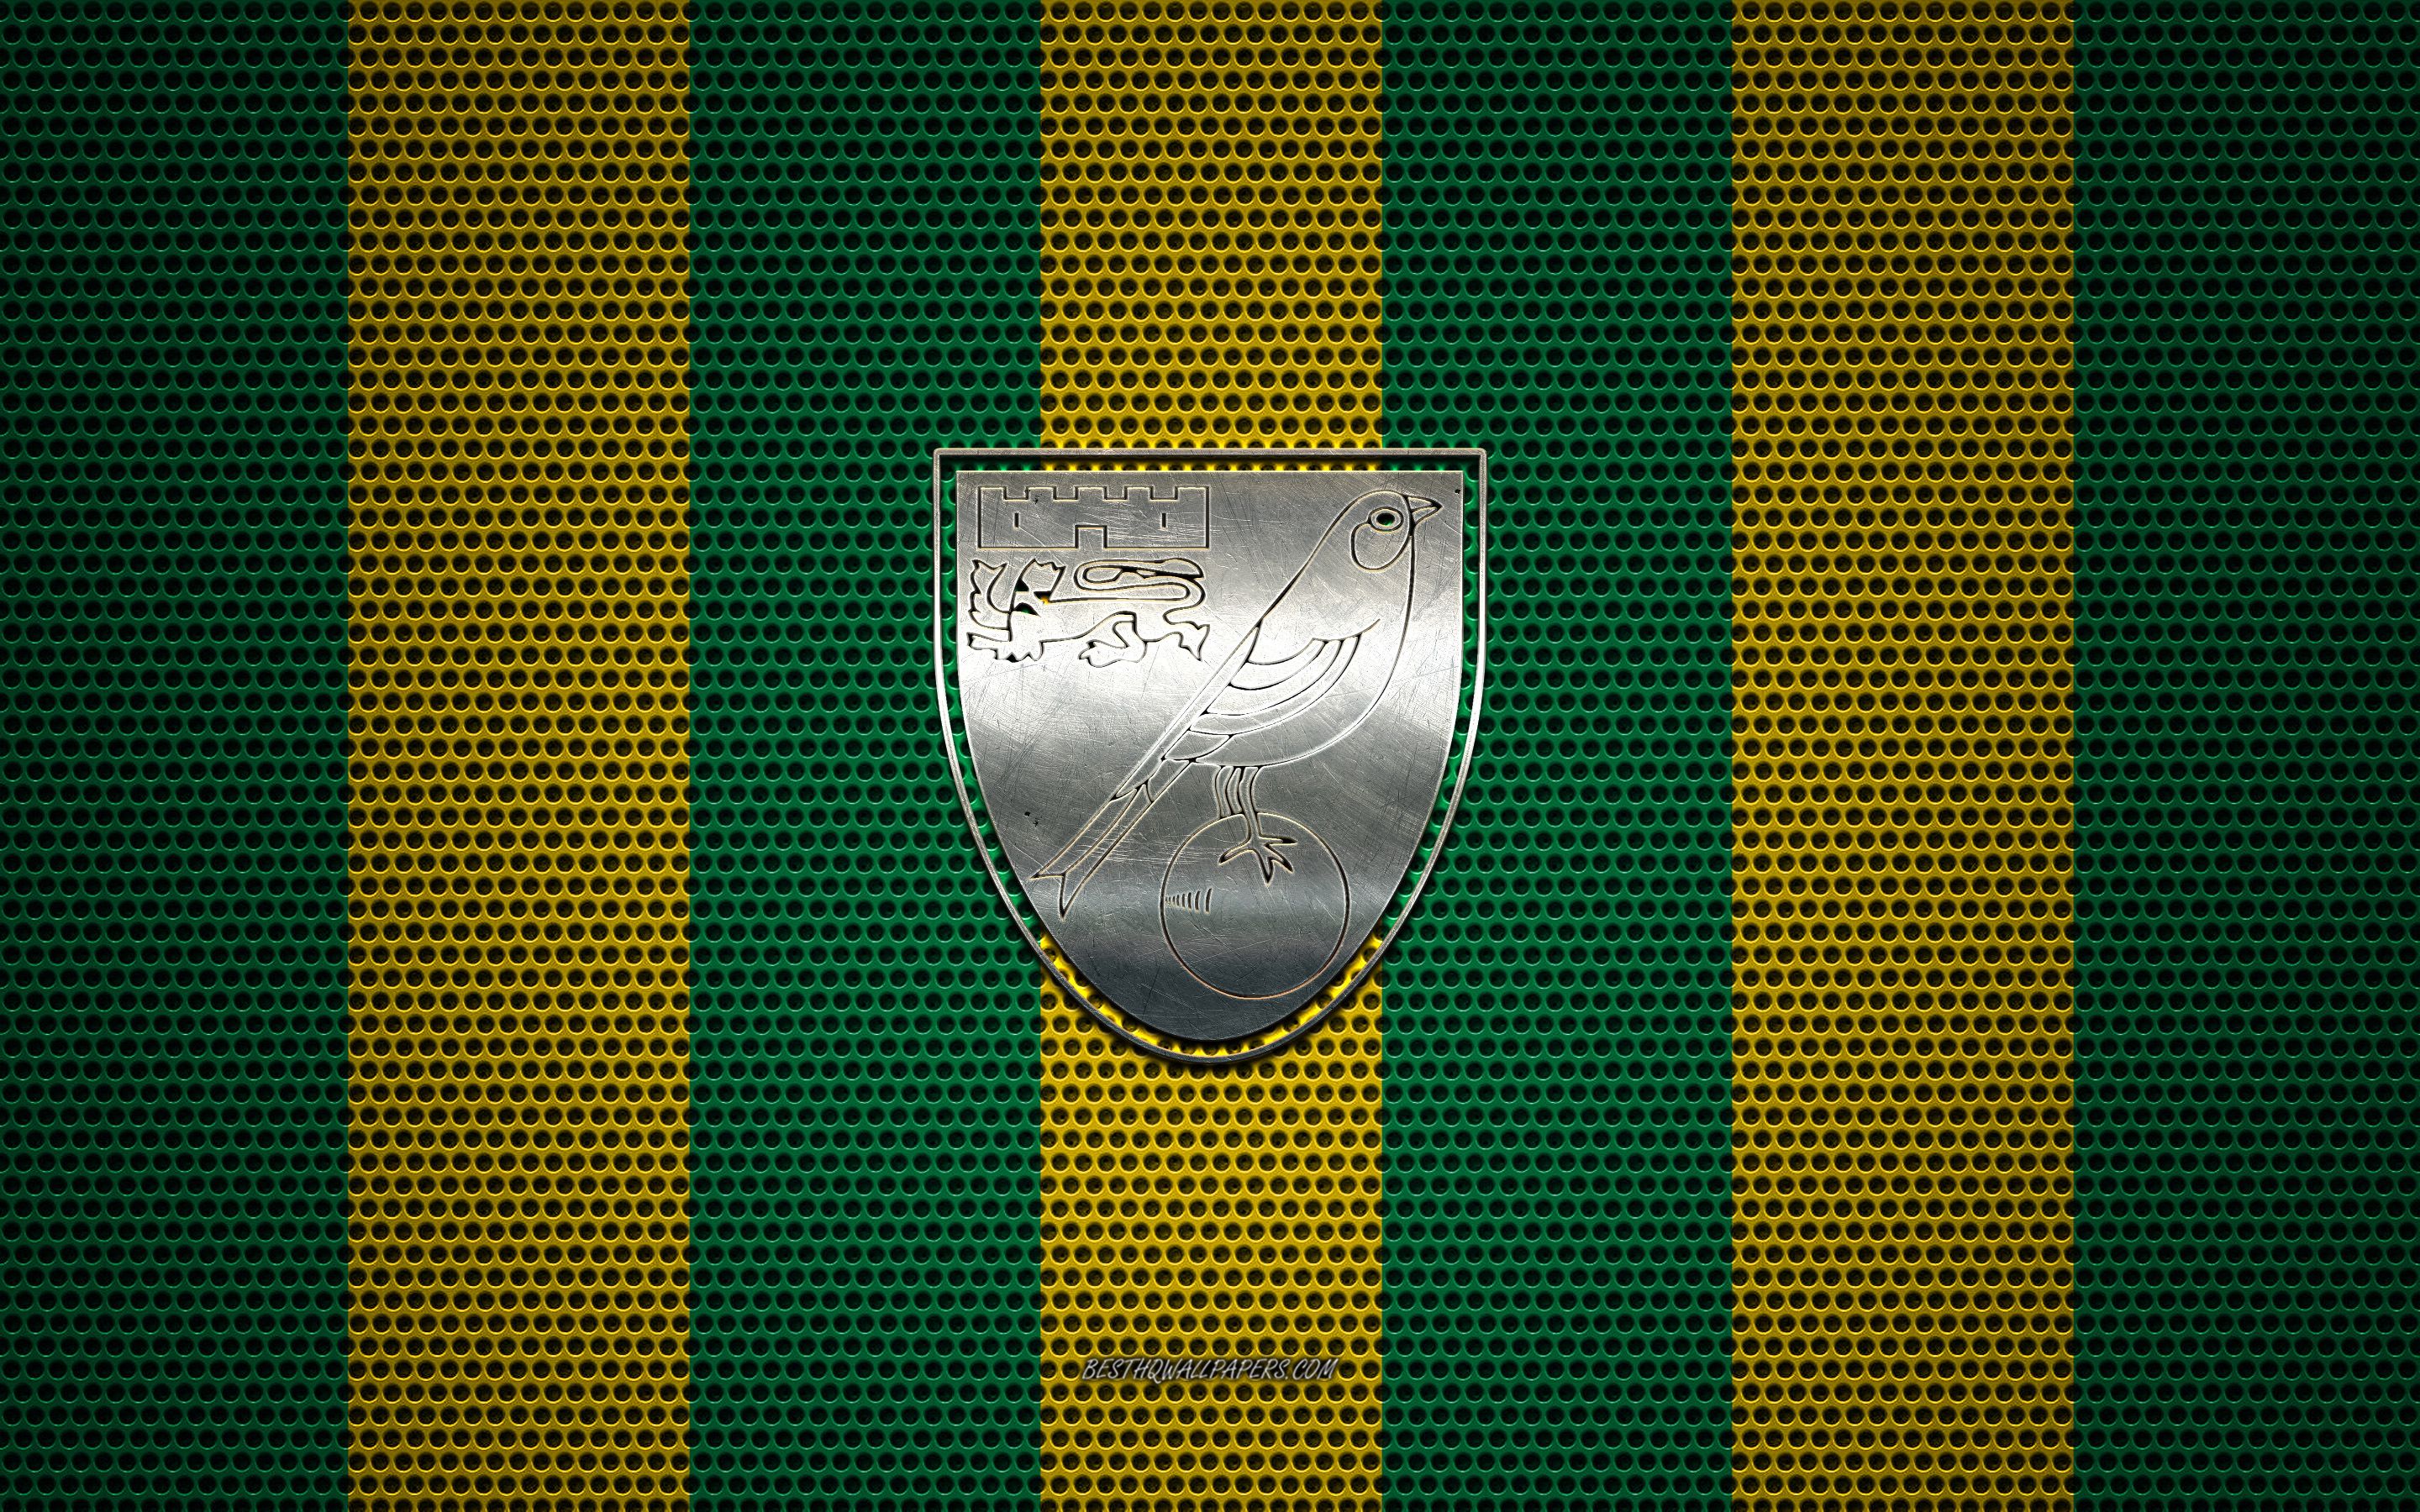 Download wallpaper Norwich City FC logo, English football club, metal emblem, green yellow metal mesh background, Norwich City FC, Premier League, Norwich, England, football for desktop with resolution 2880x1800. High Quality HD